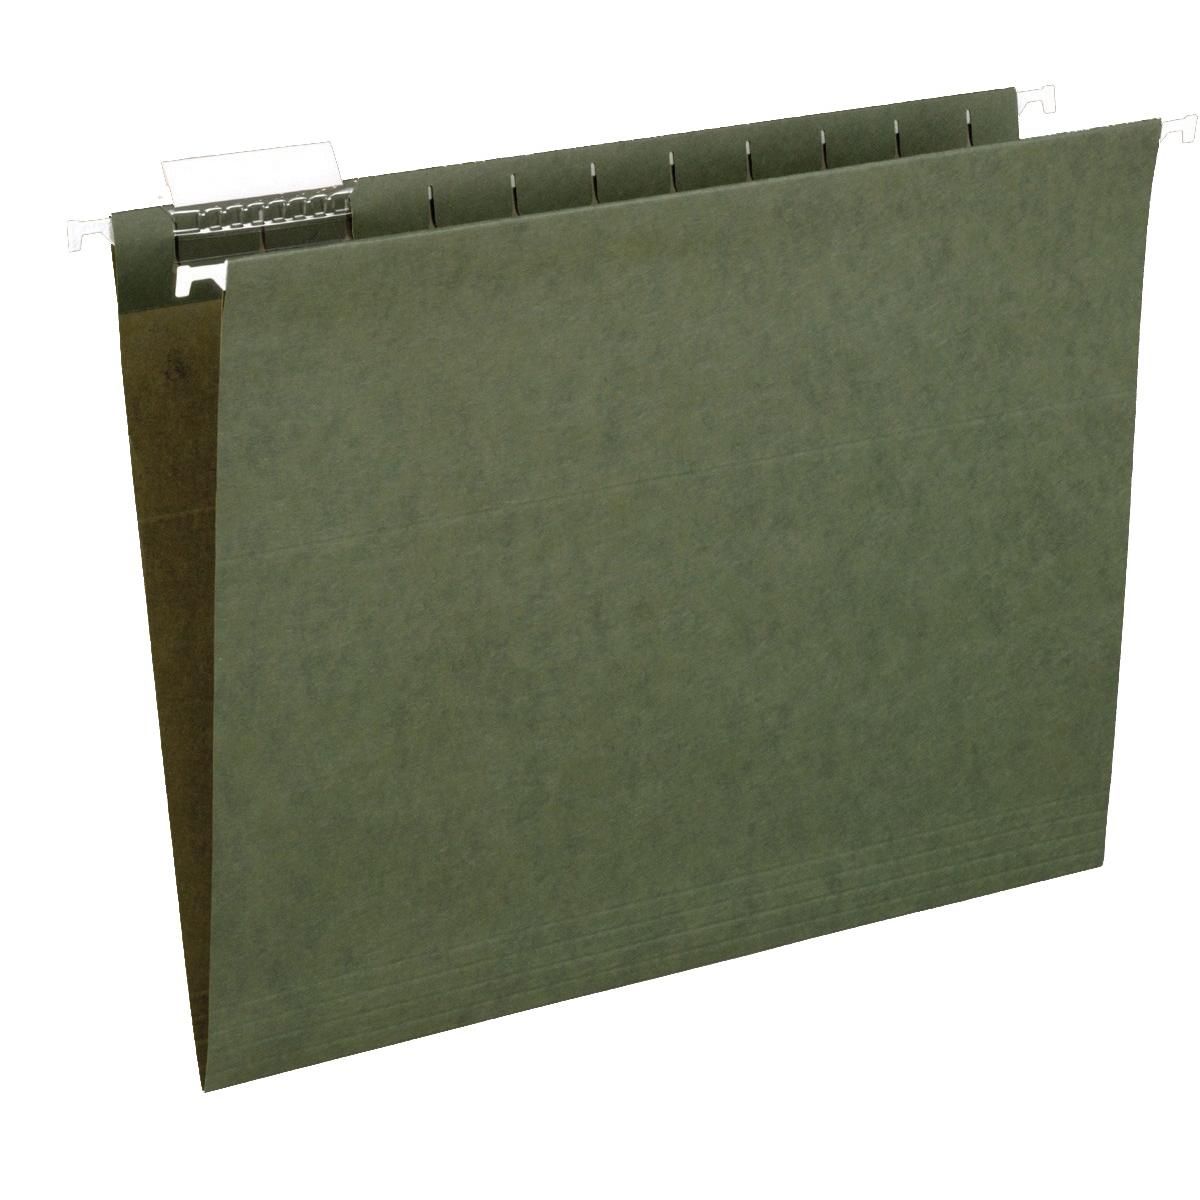  Esselte 91525 File Pro Standard Green Hanging File Folders 25 Pack